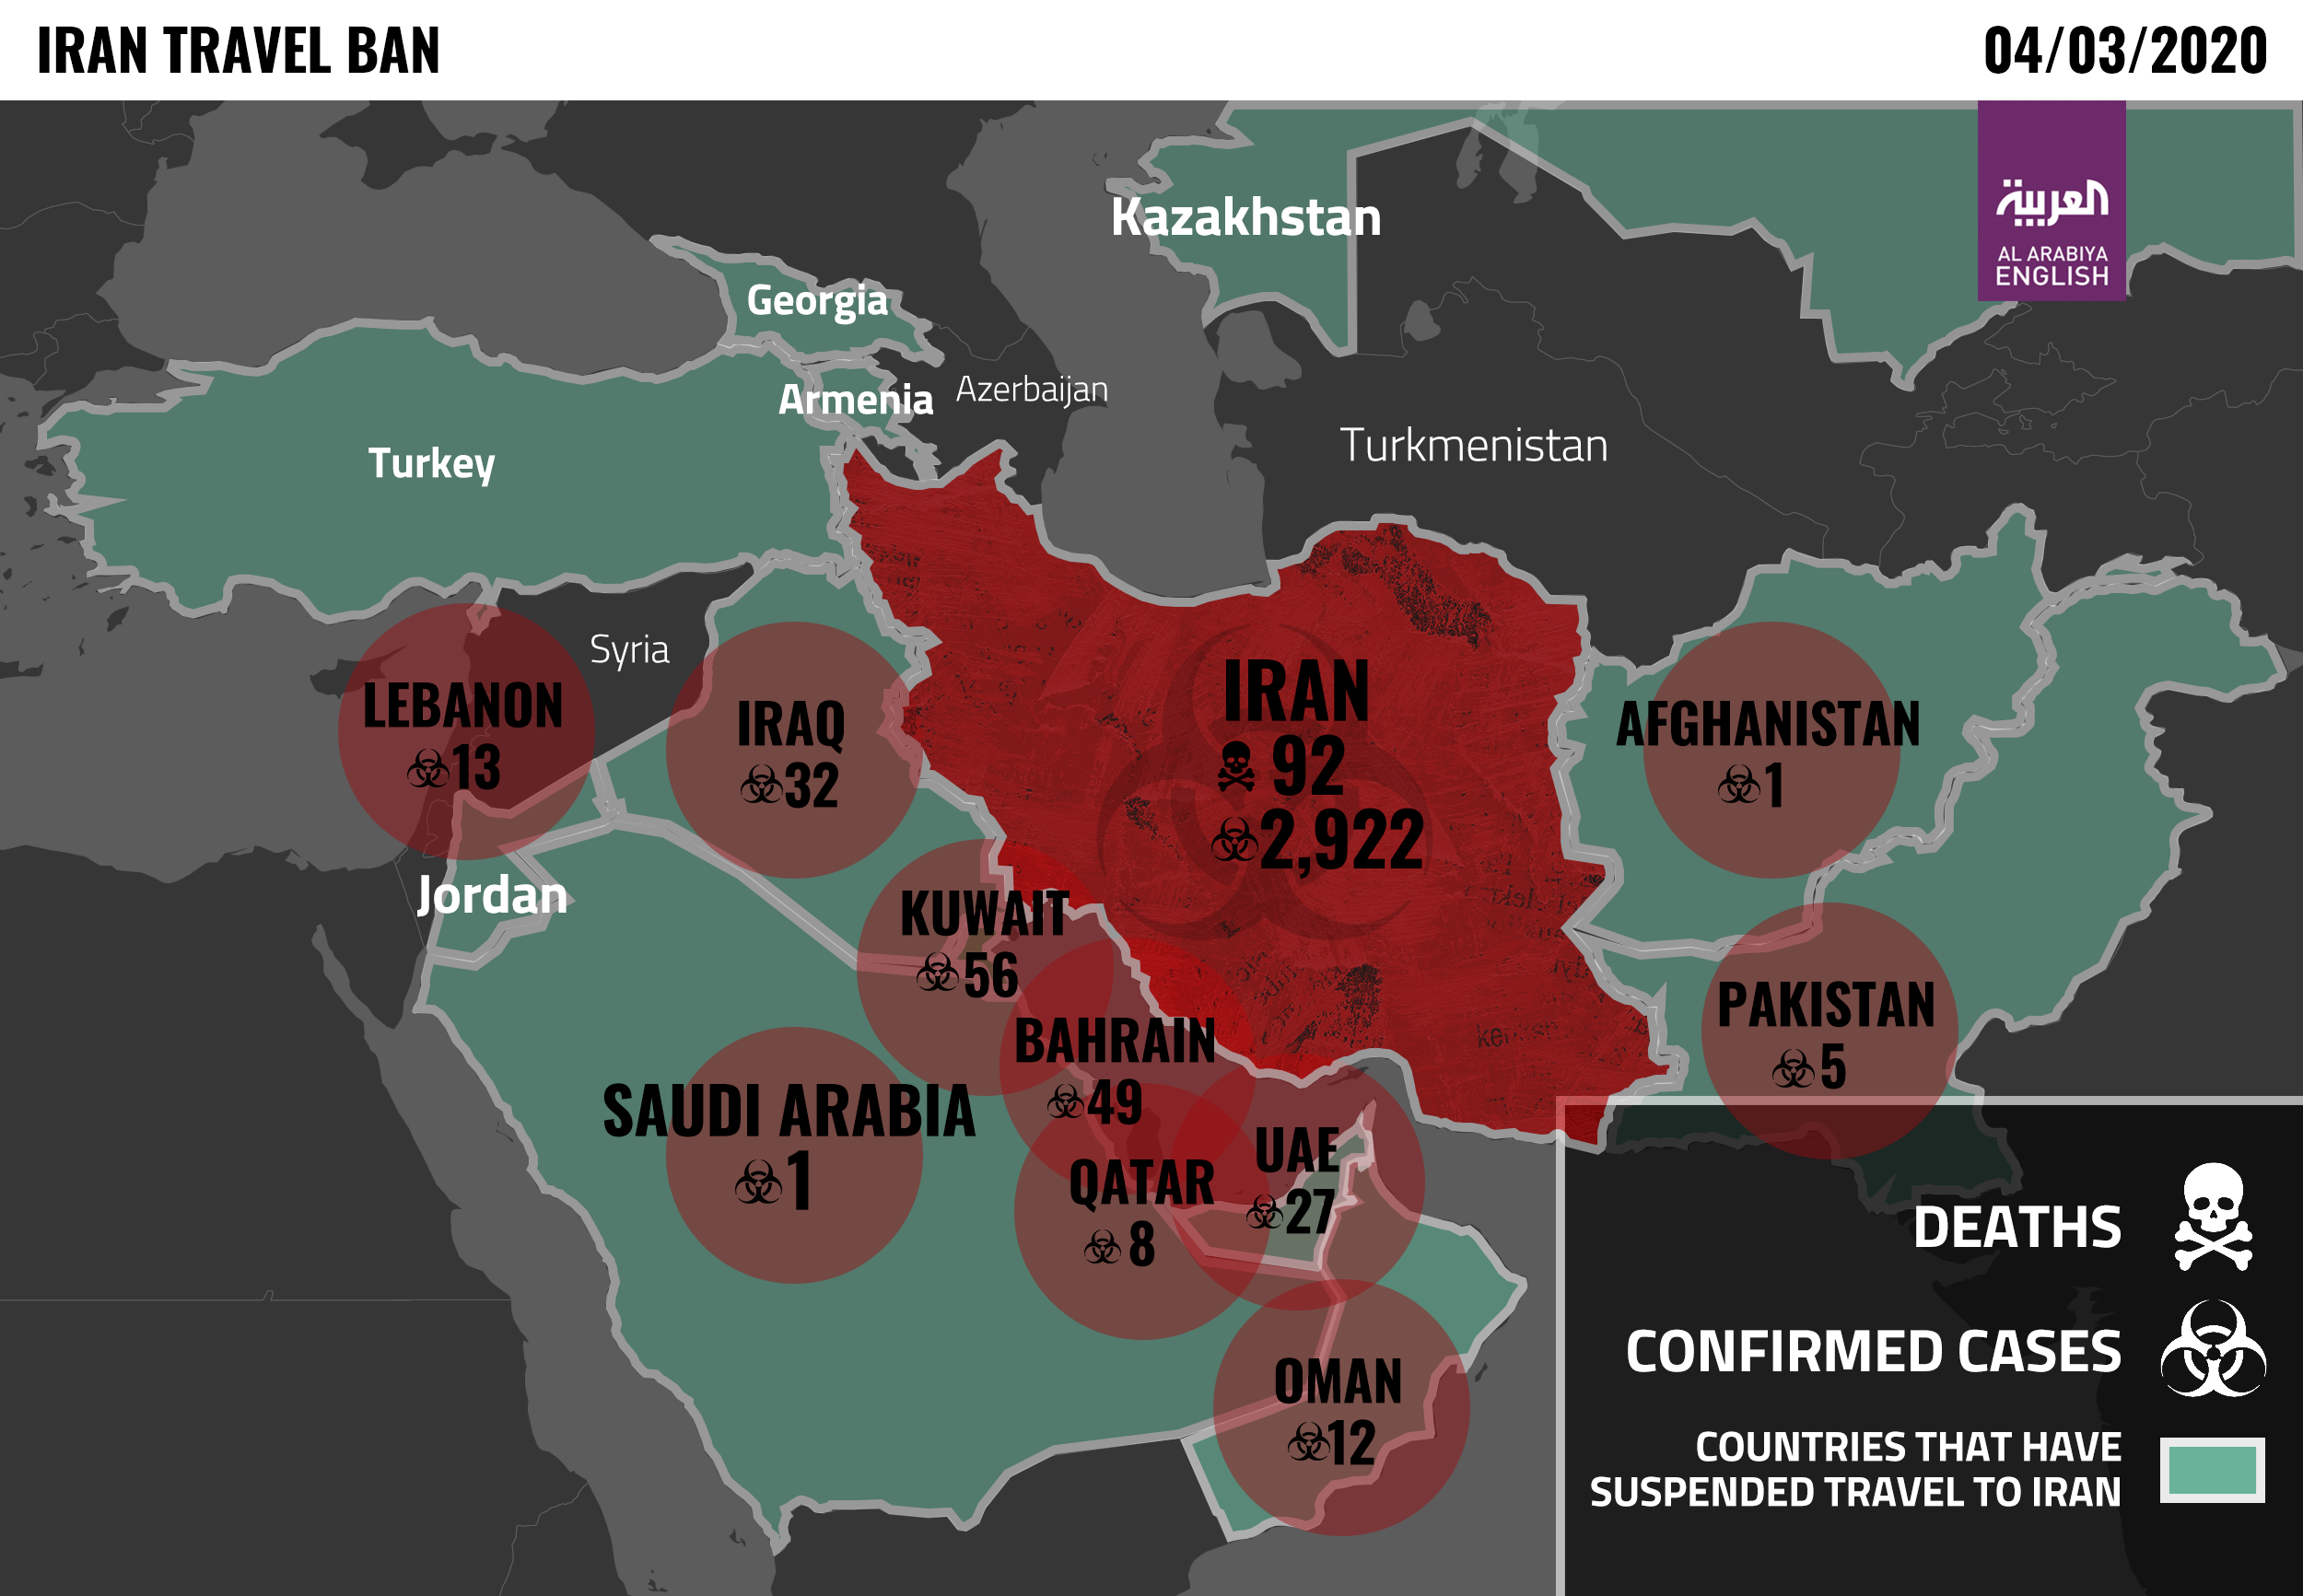 Iran Travel ban infographic 04/03/20_updated